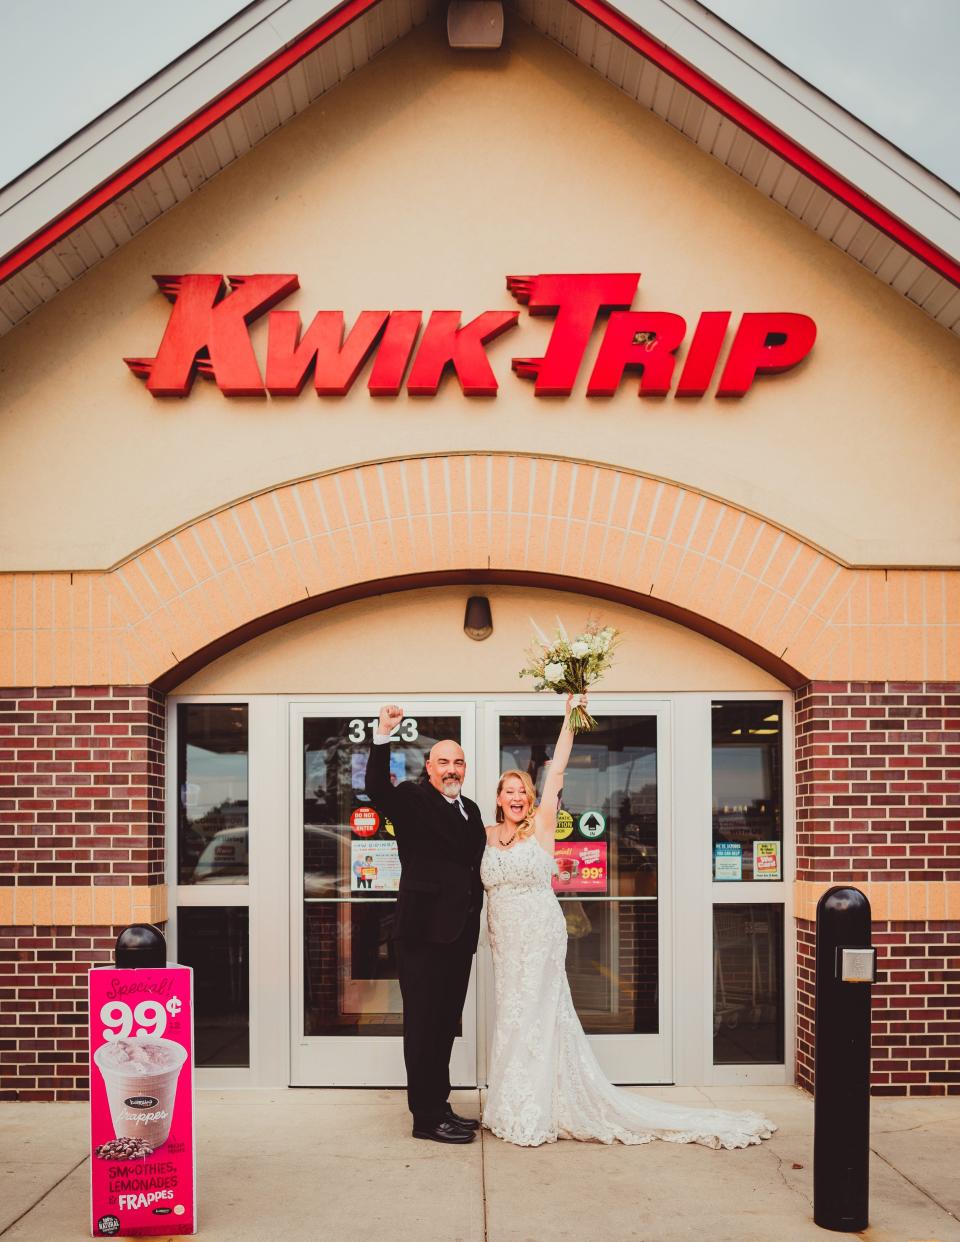 Ashley Ormes and Mark Steinke at Kwik Trip in wedding attire.